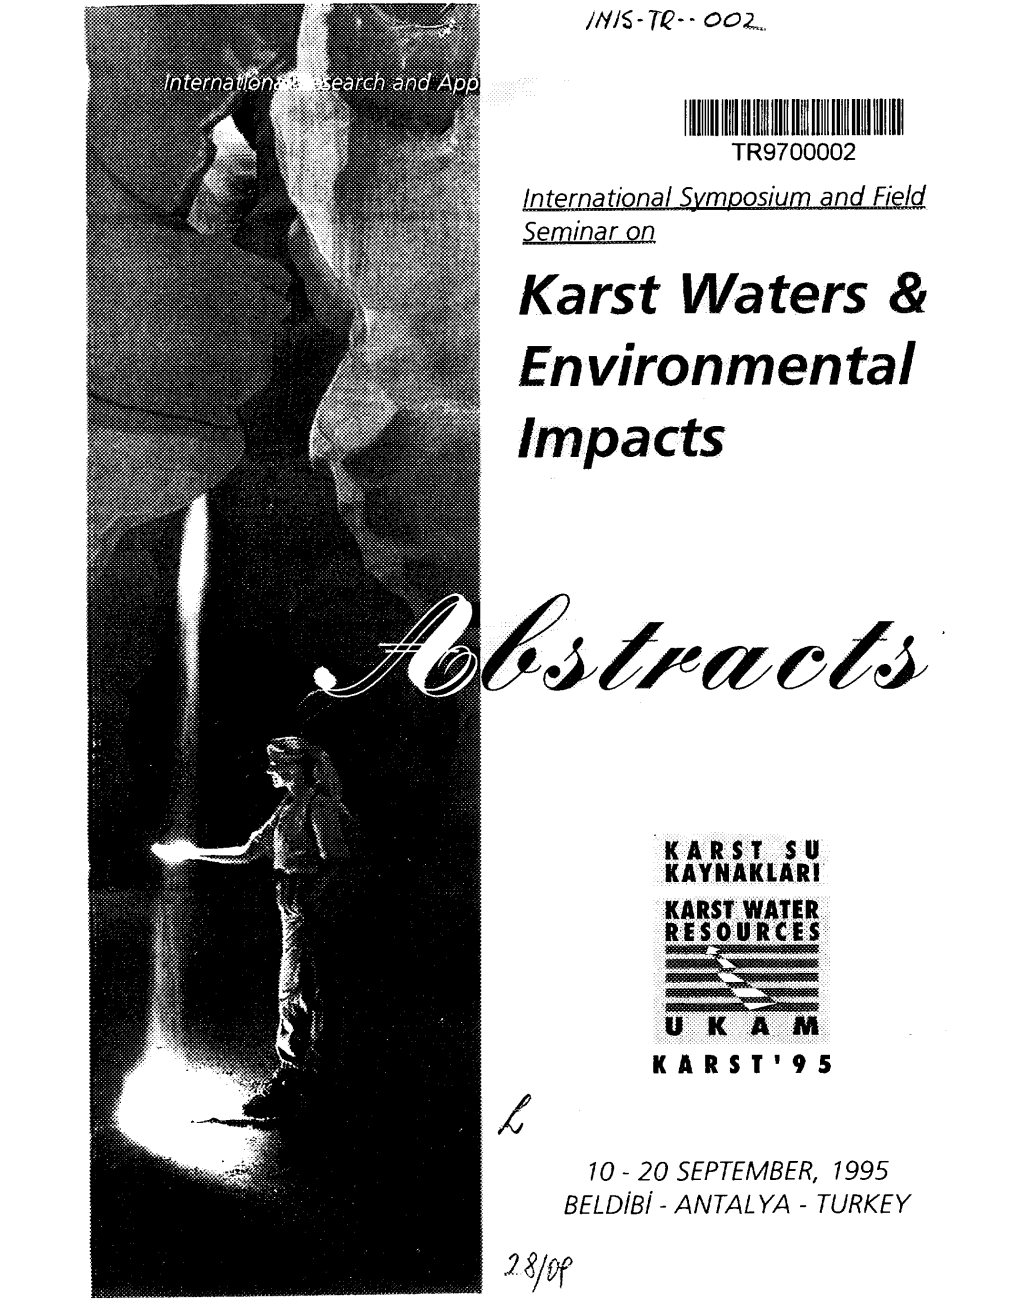 Karst Waters & Environmental Impacts